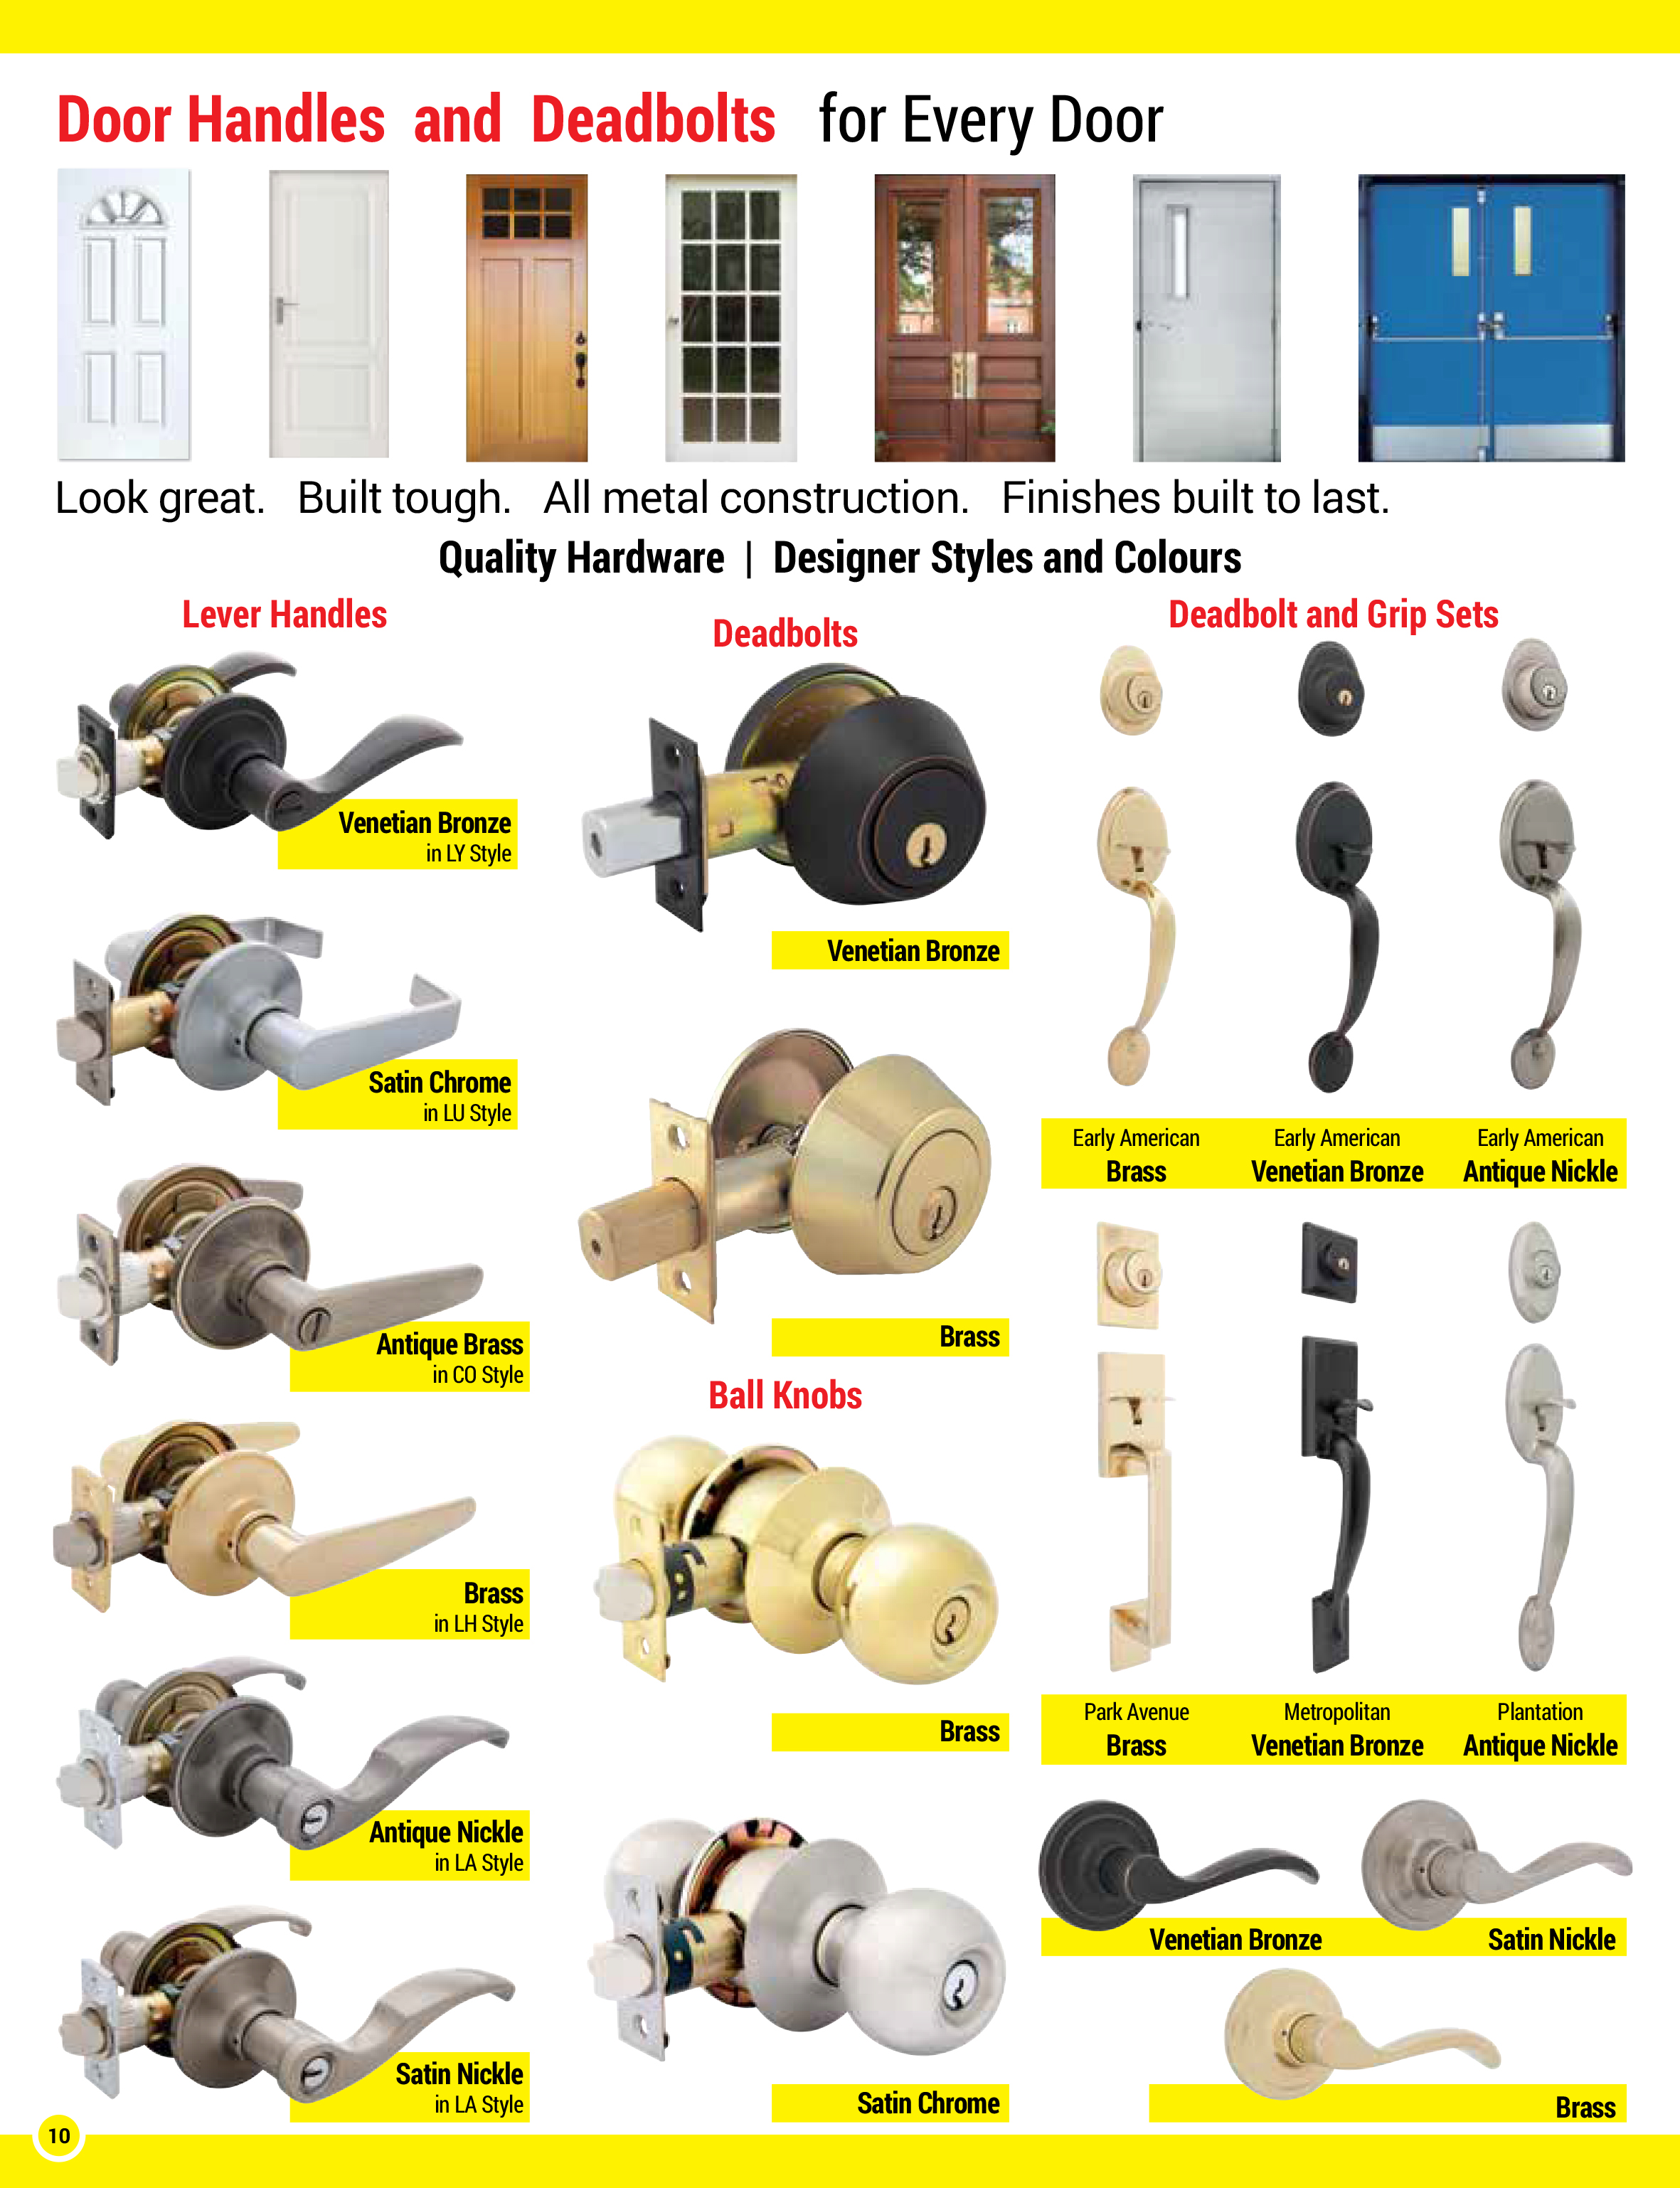 Elegant grip sets, grade 1 deadbolts, lever handles and ball knobs. Door Surgeon sales and service.